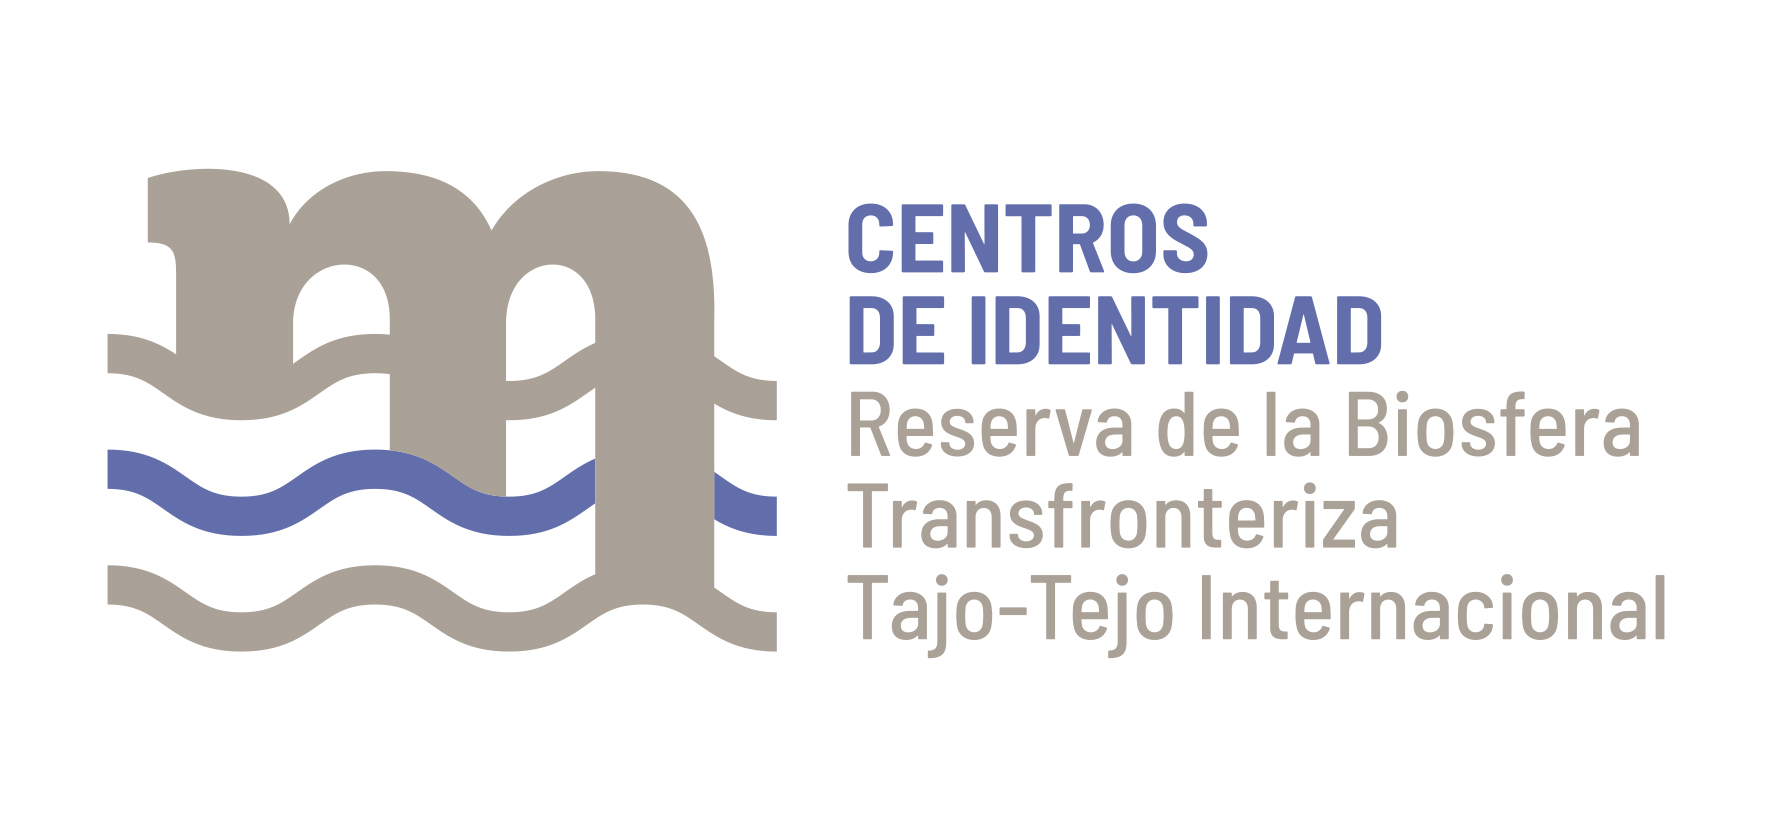 Centros de Identidad - Reserva de la Biosfera Transfronteriza Tajo-Tejo Internacional